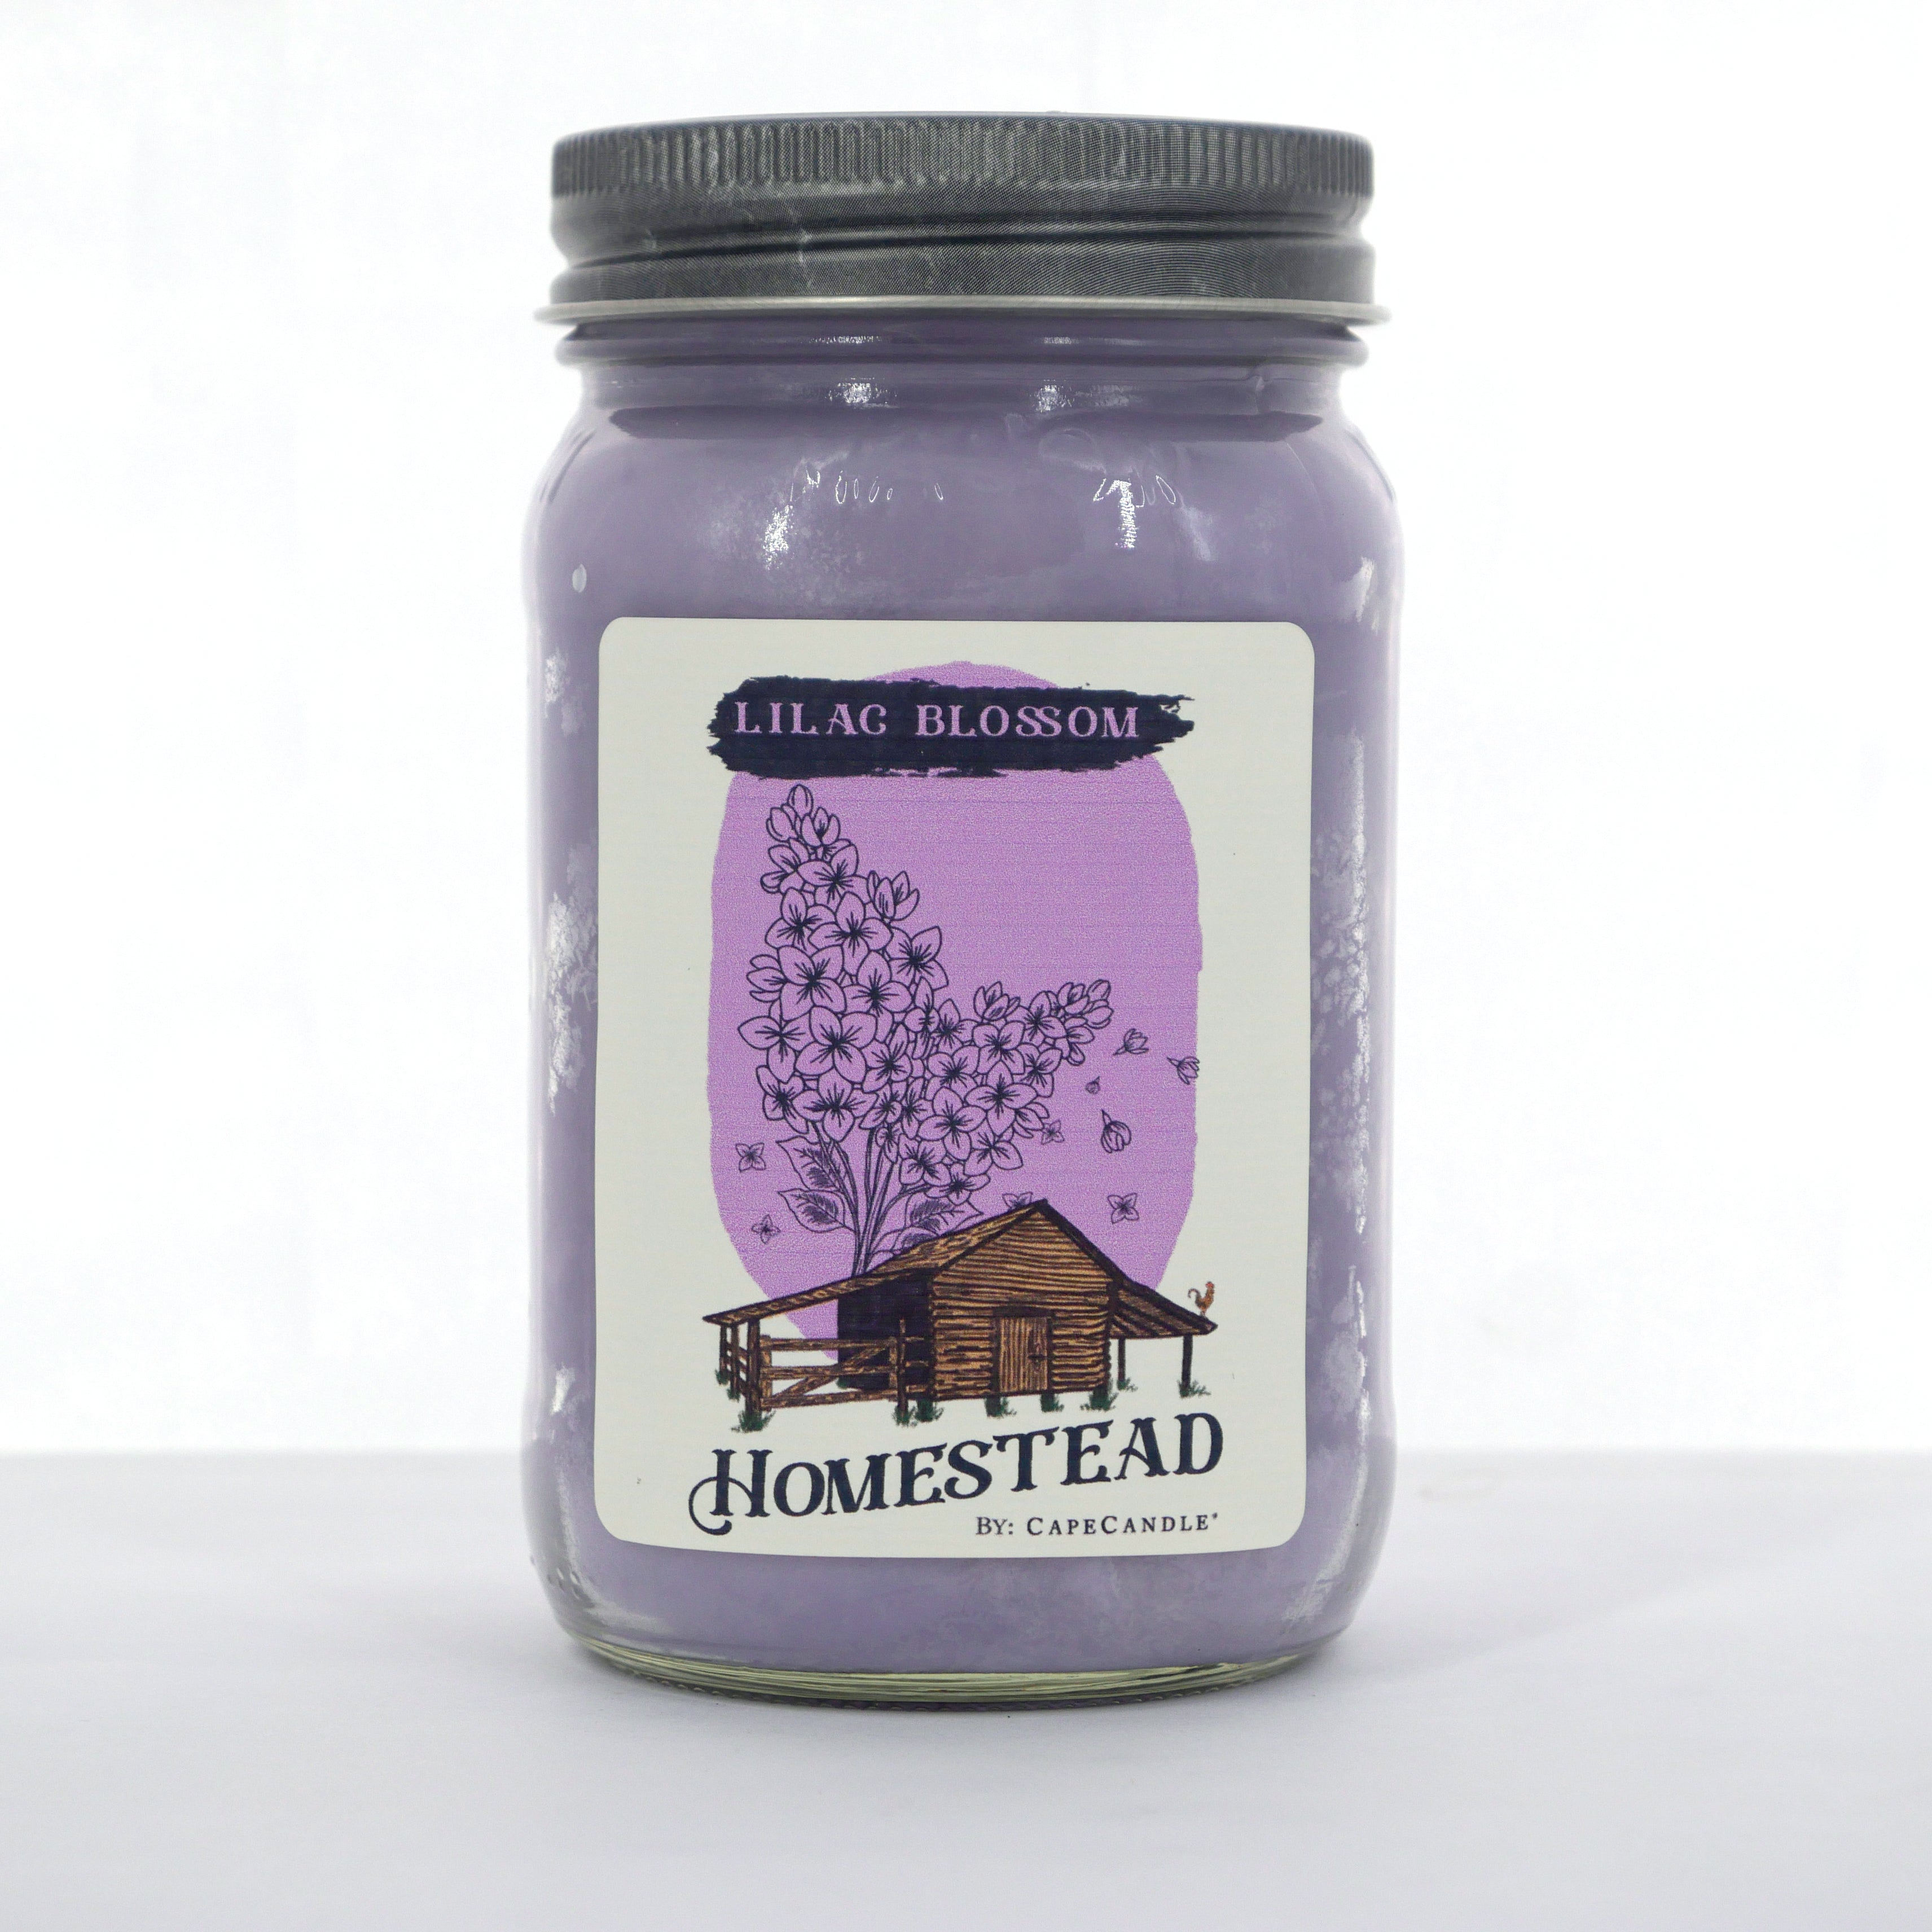 Lilac Blossom Soy Candle 16oz Homestead Mason Jar by Cape Candle